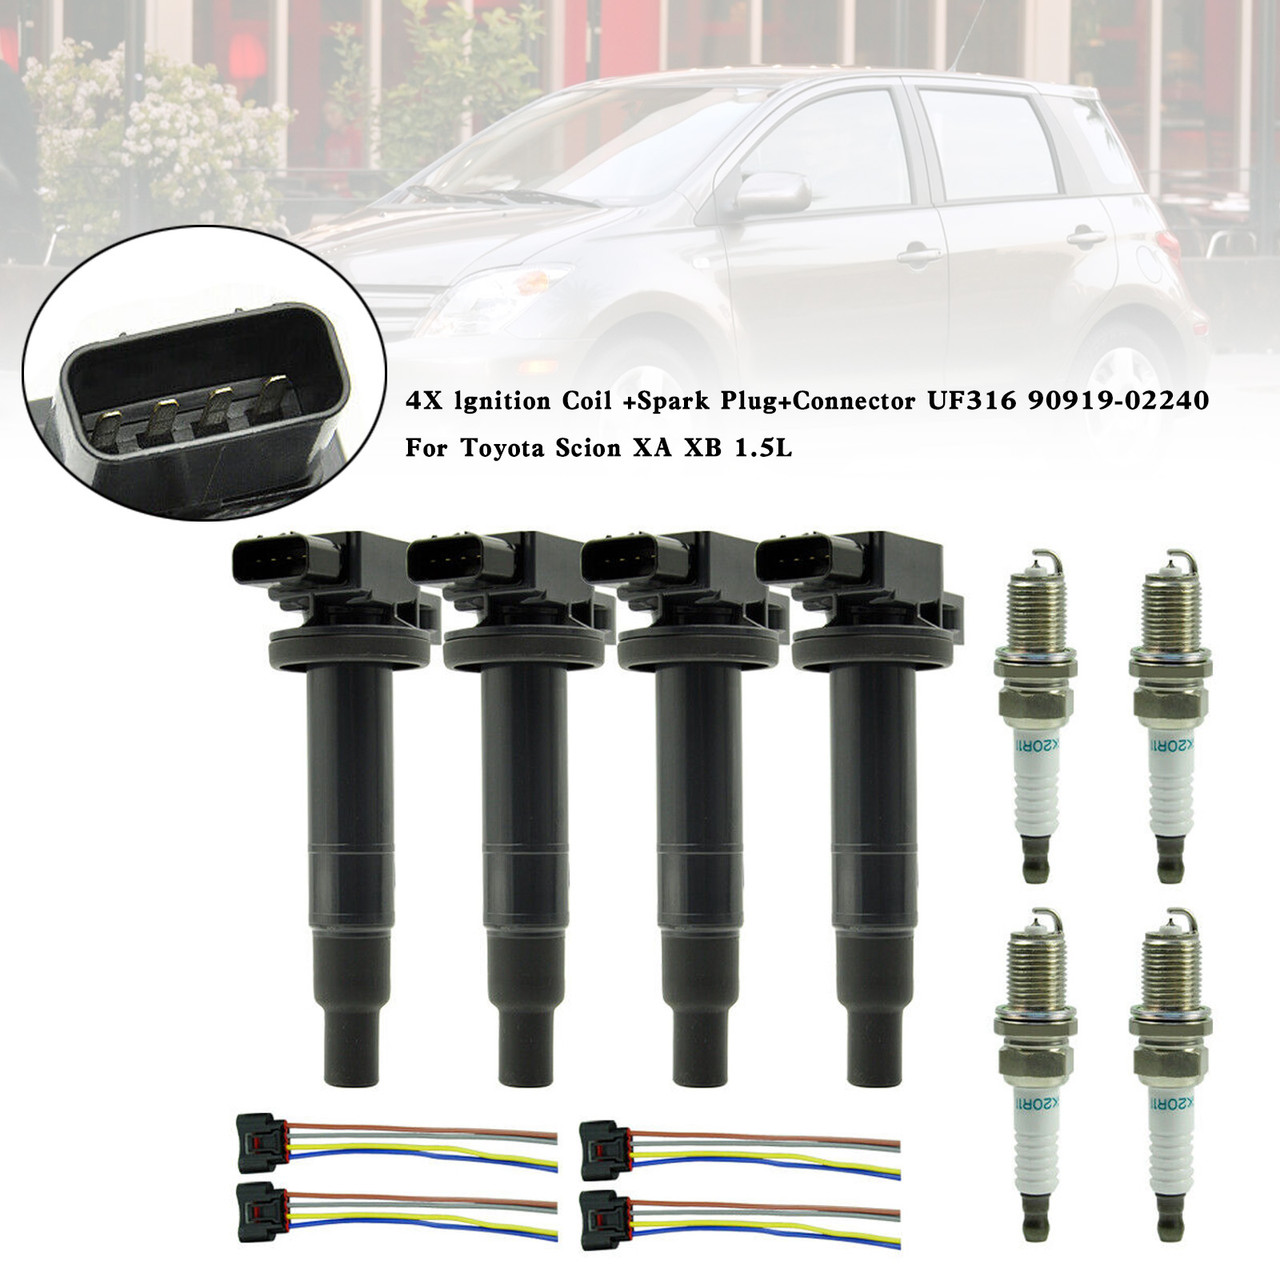 4X lgnition Coil +Spark Plug+Connector UF316 90919-02240 For Toyota Scion XA XB 1.5L